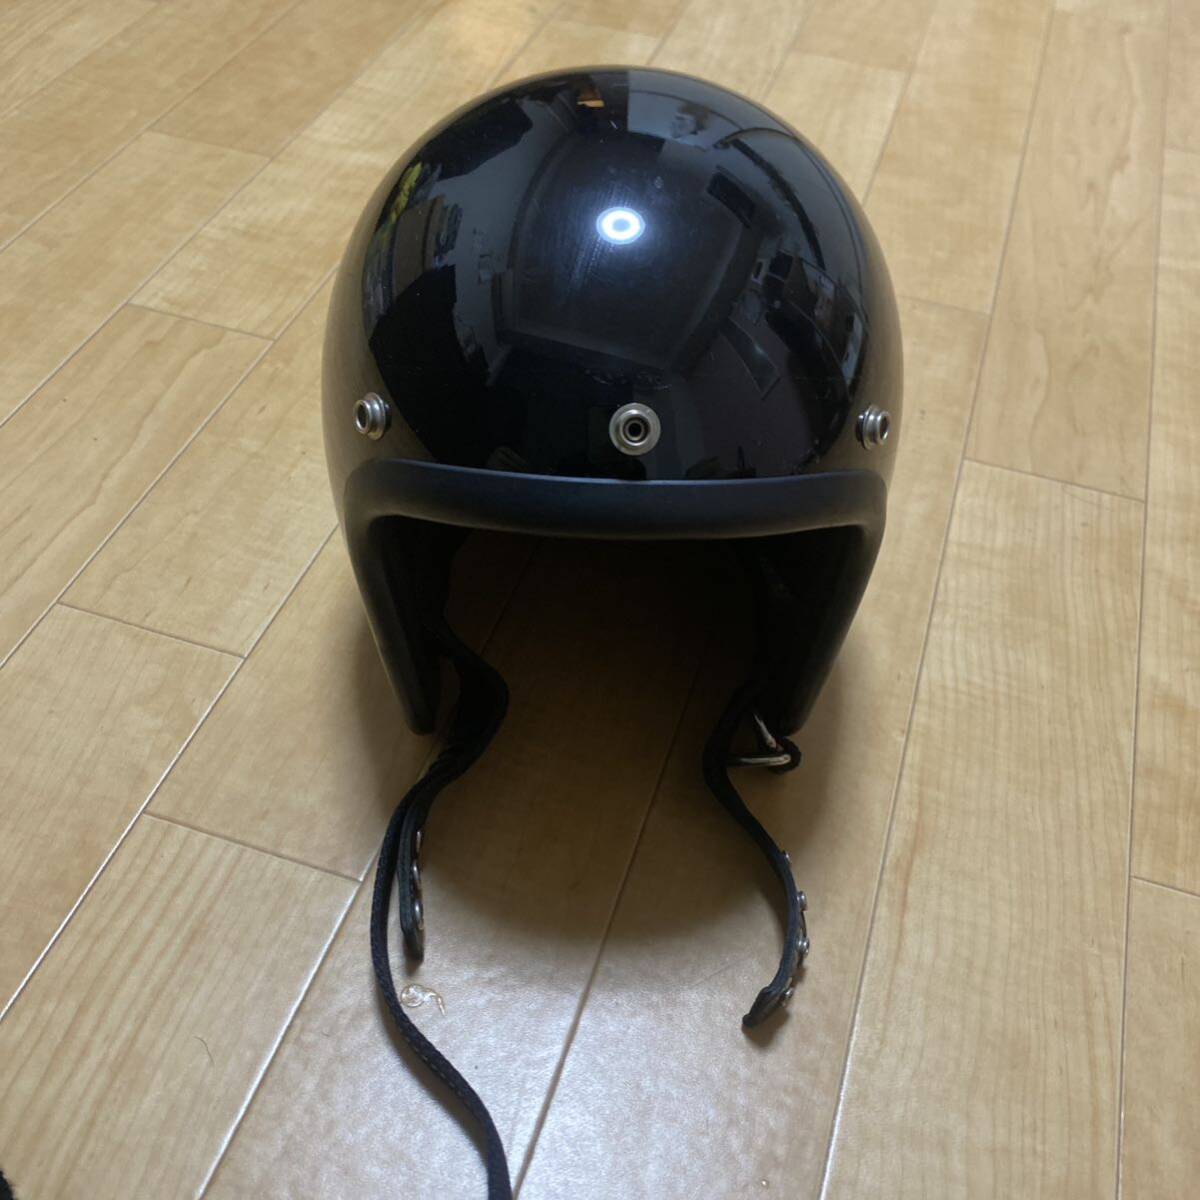  tt&co 500TX ブラック M Lサイズ ジェットヘルメットの画像1